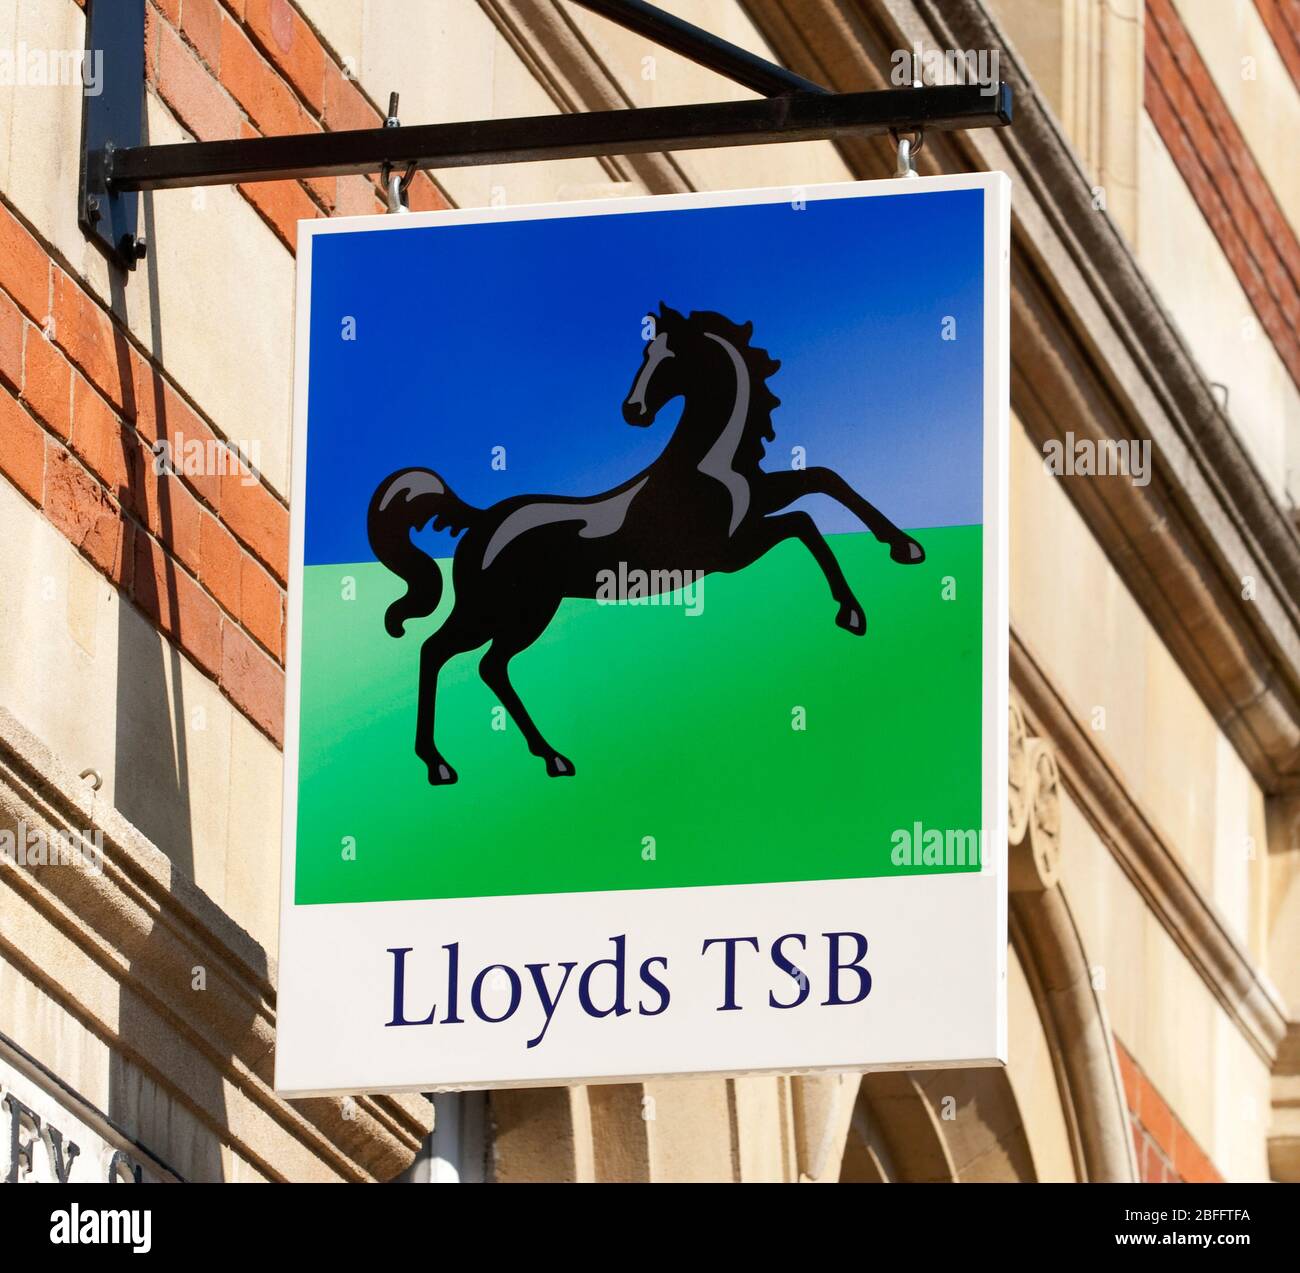 Picture shows Lloyds TSB logo. Stock Photo